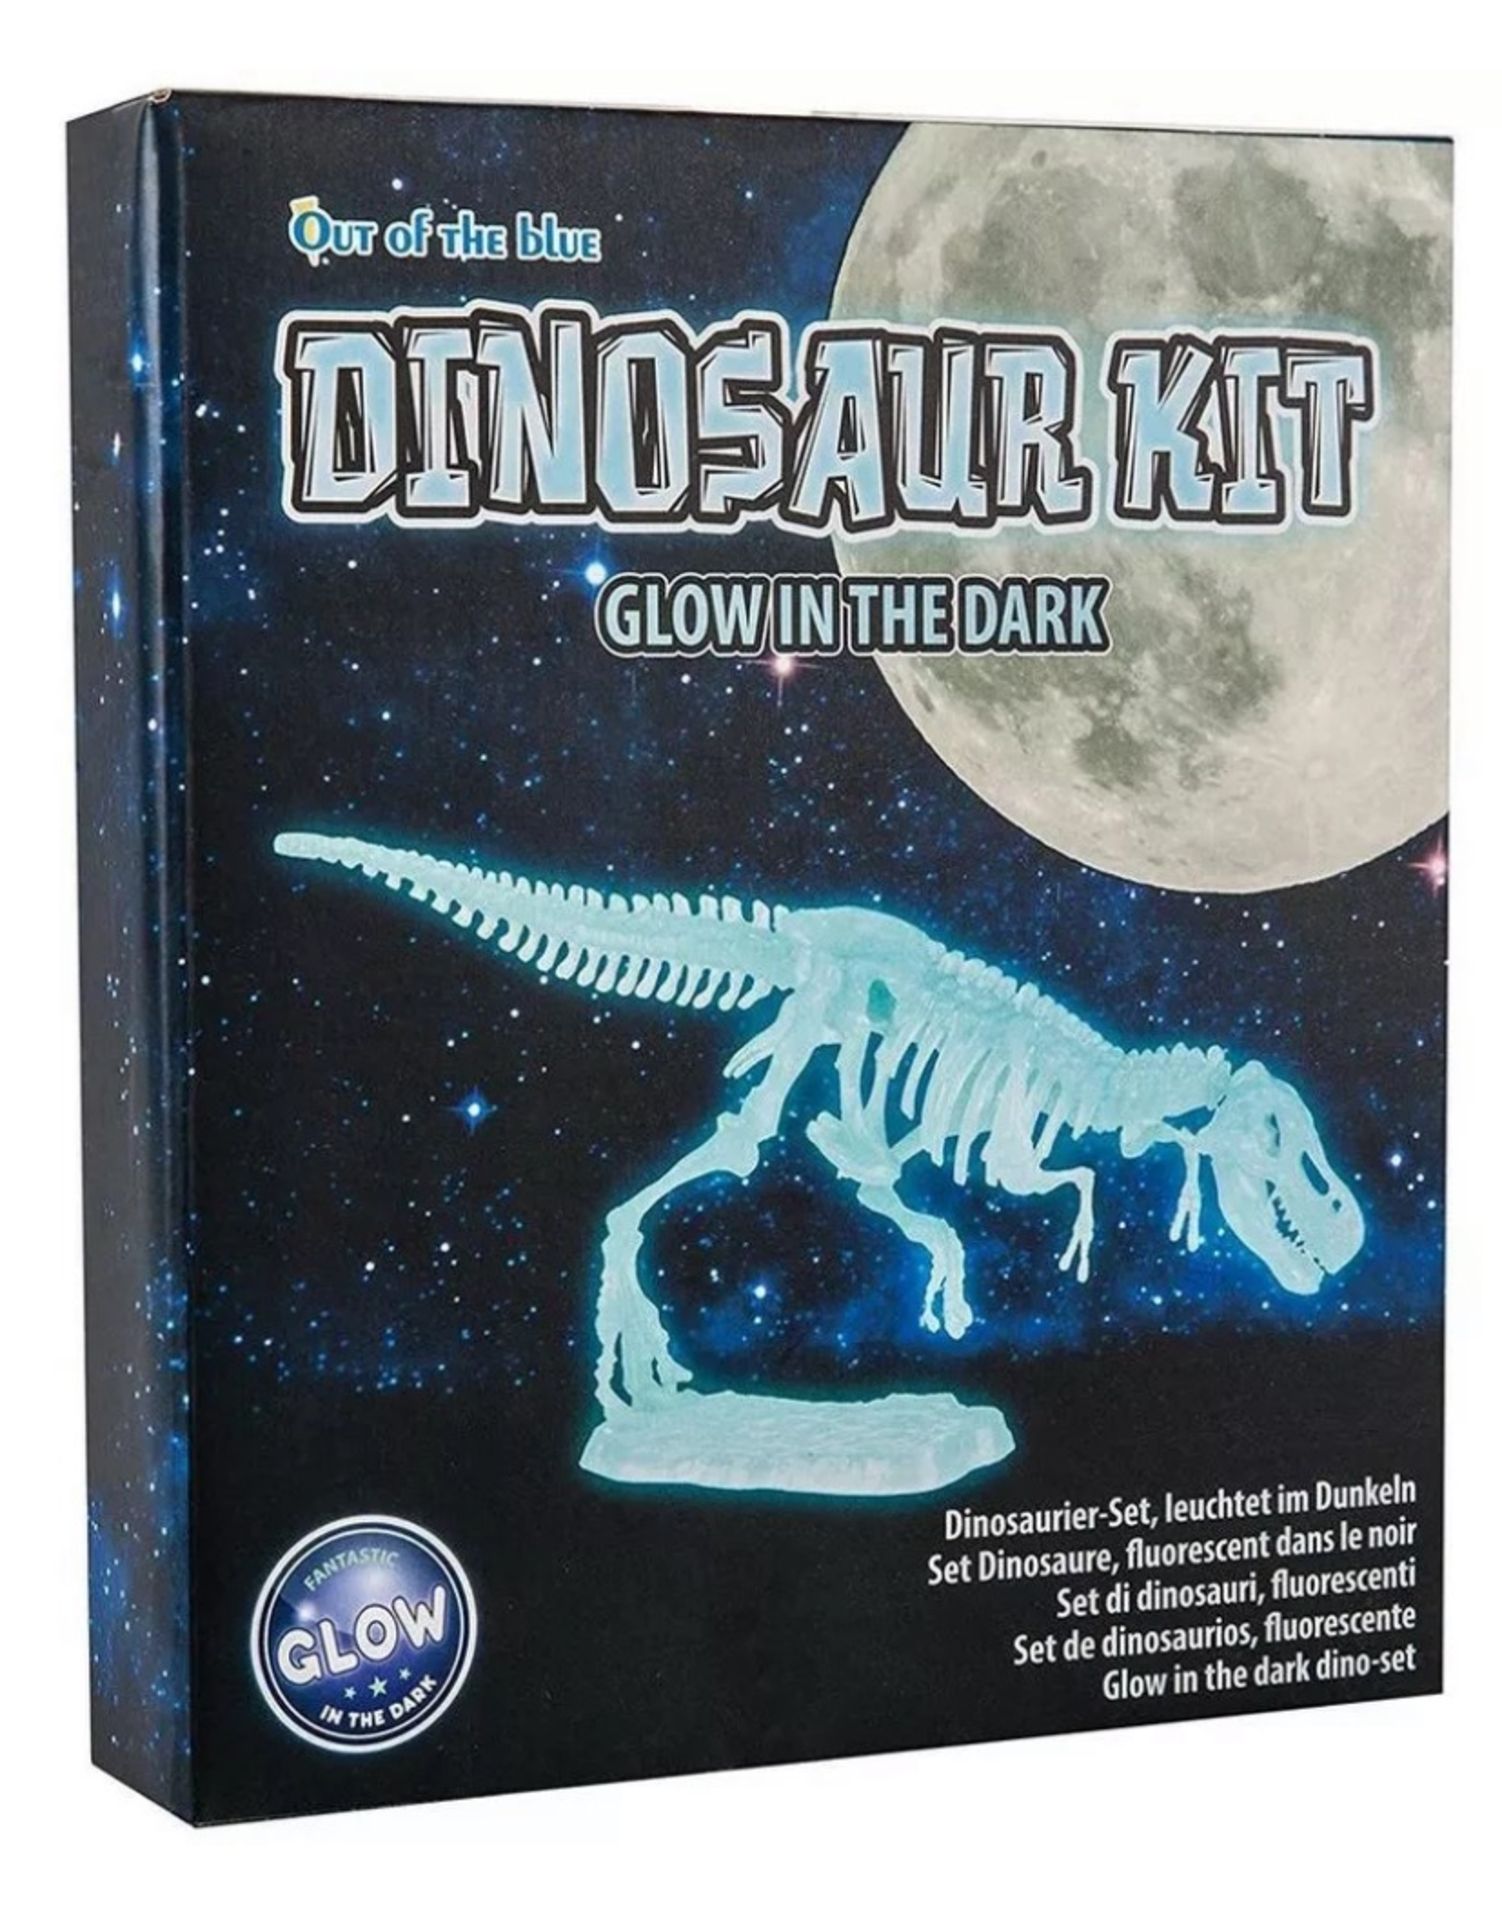 35 Glow In The Dark Dinosaur Kits - Image 2 of 2